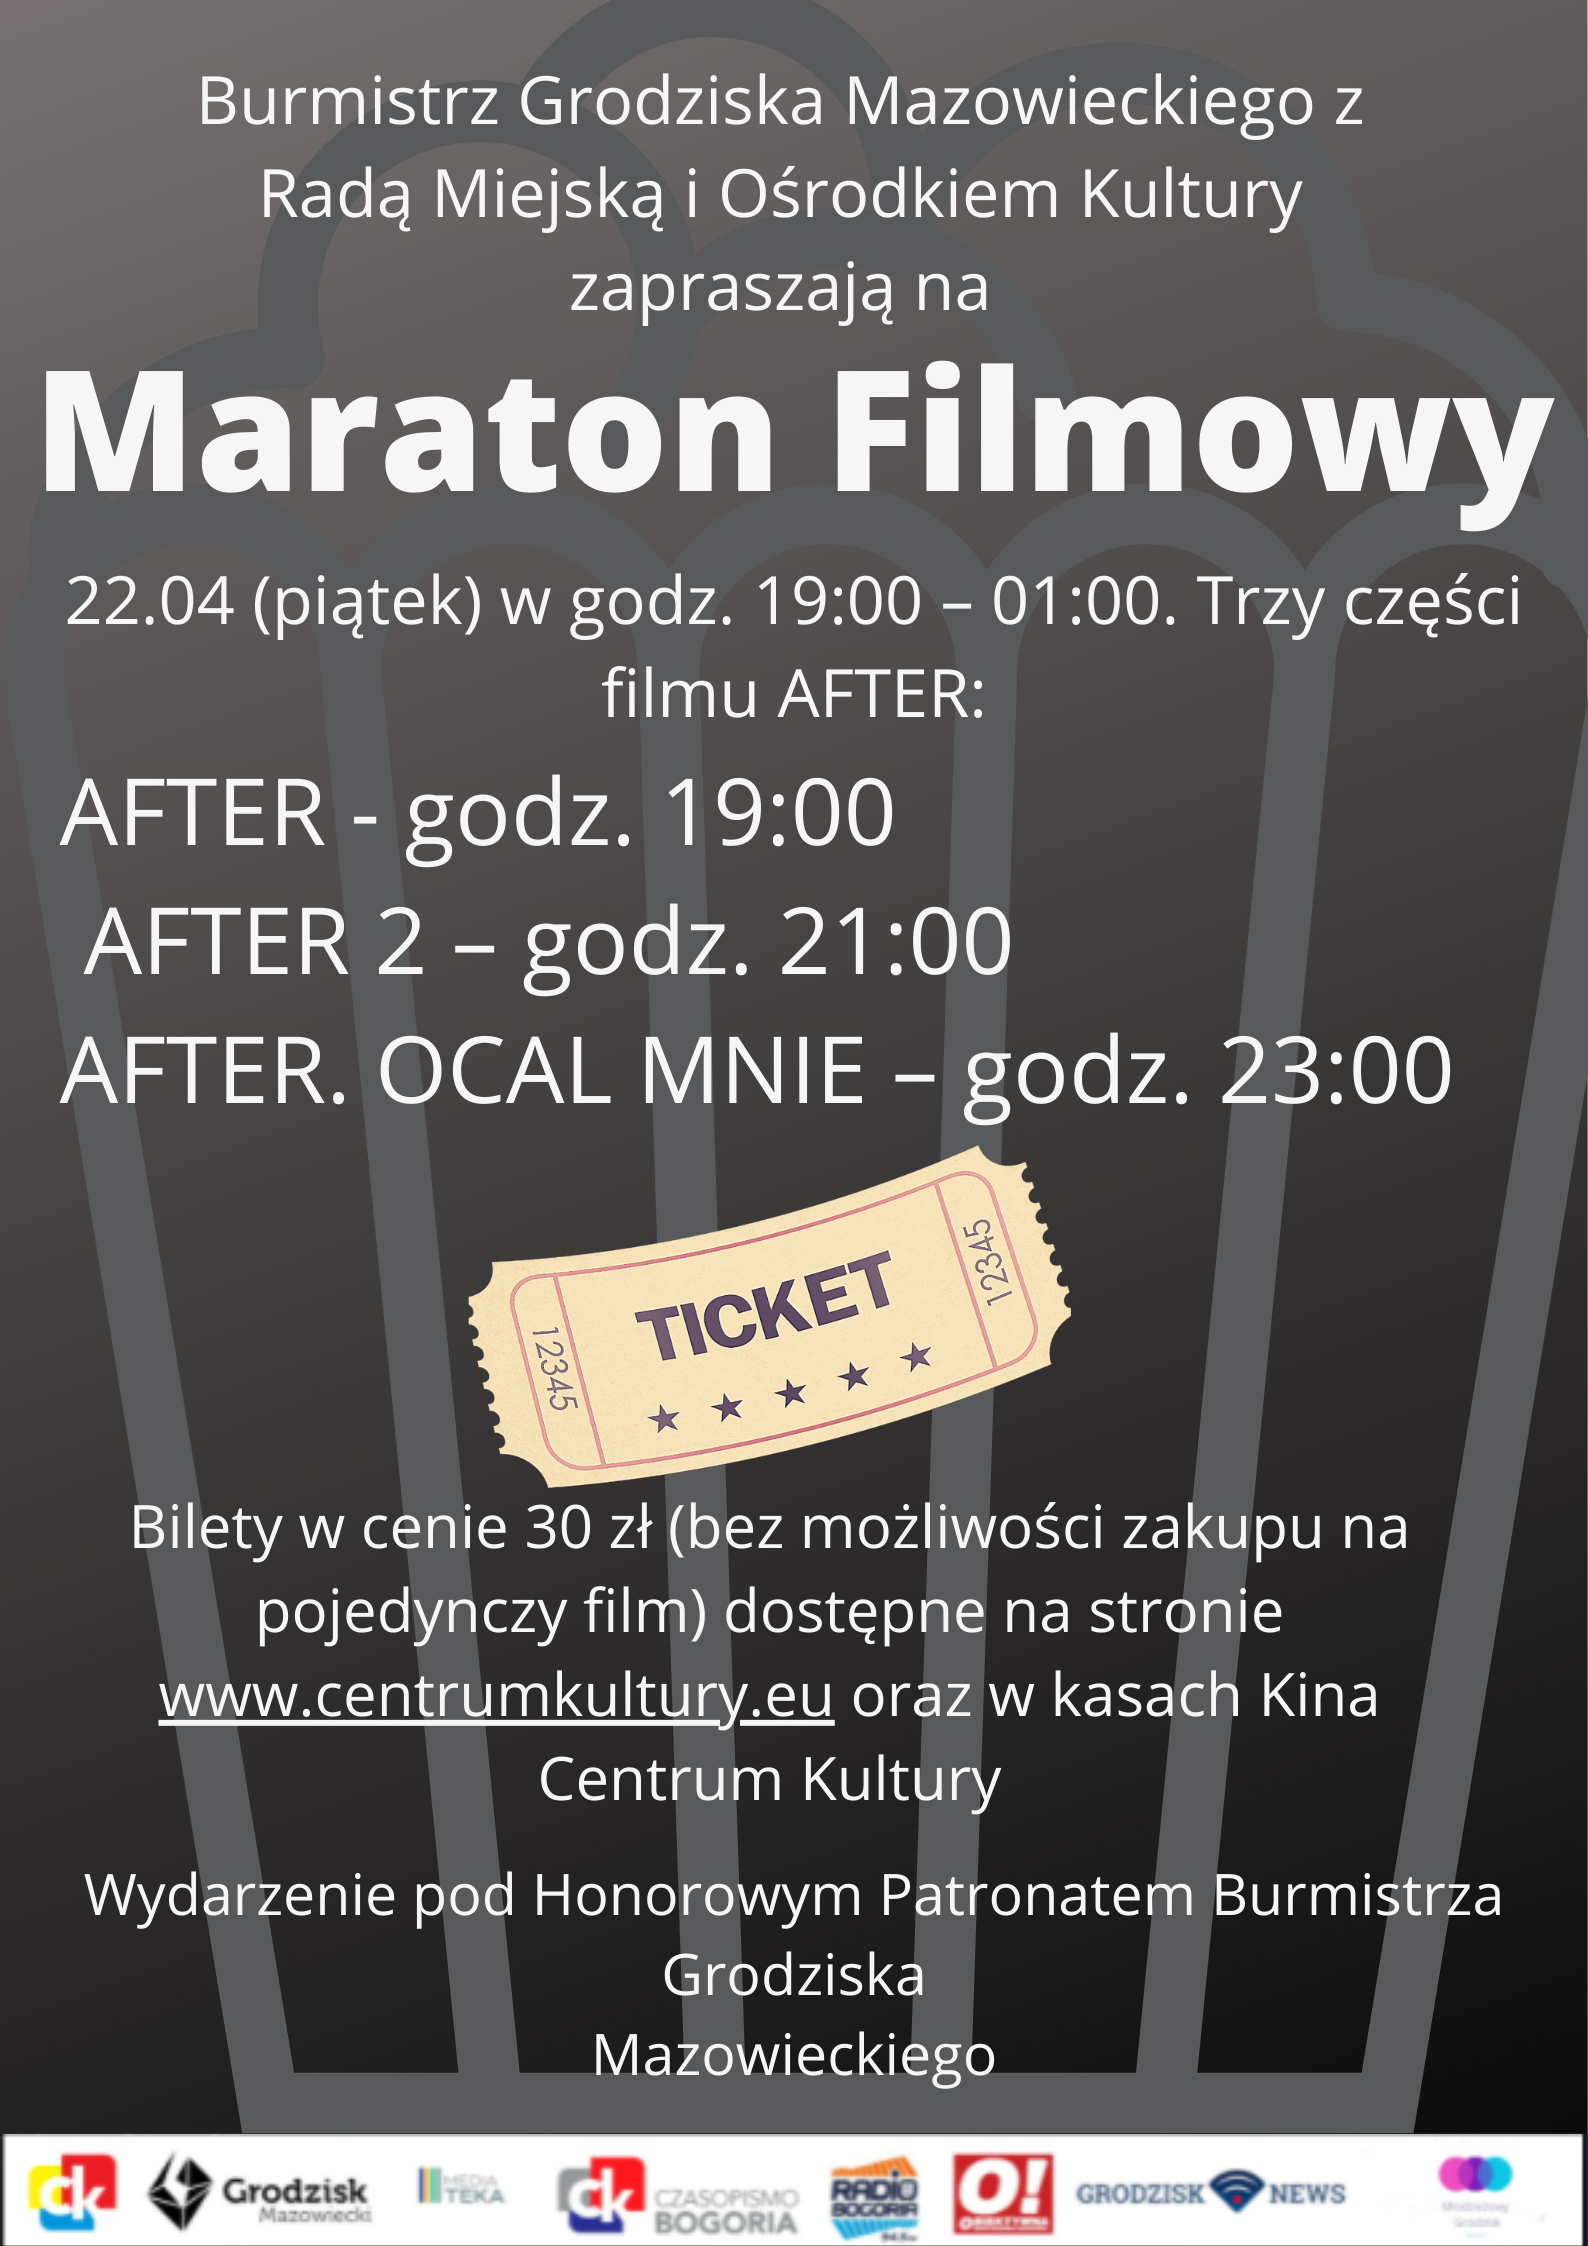 Maraton Filmowy “AFTER”